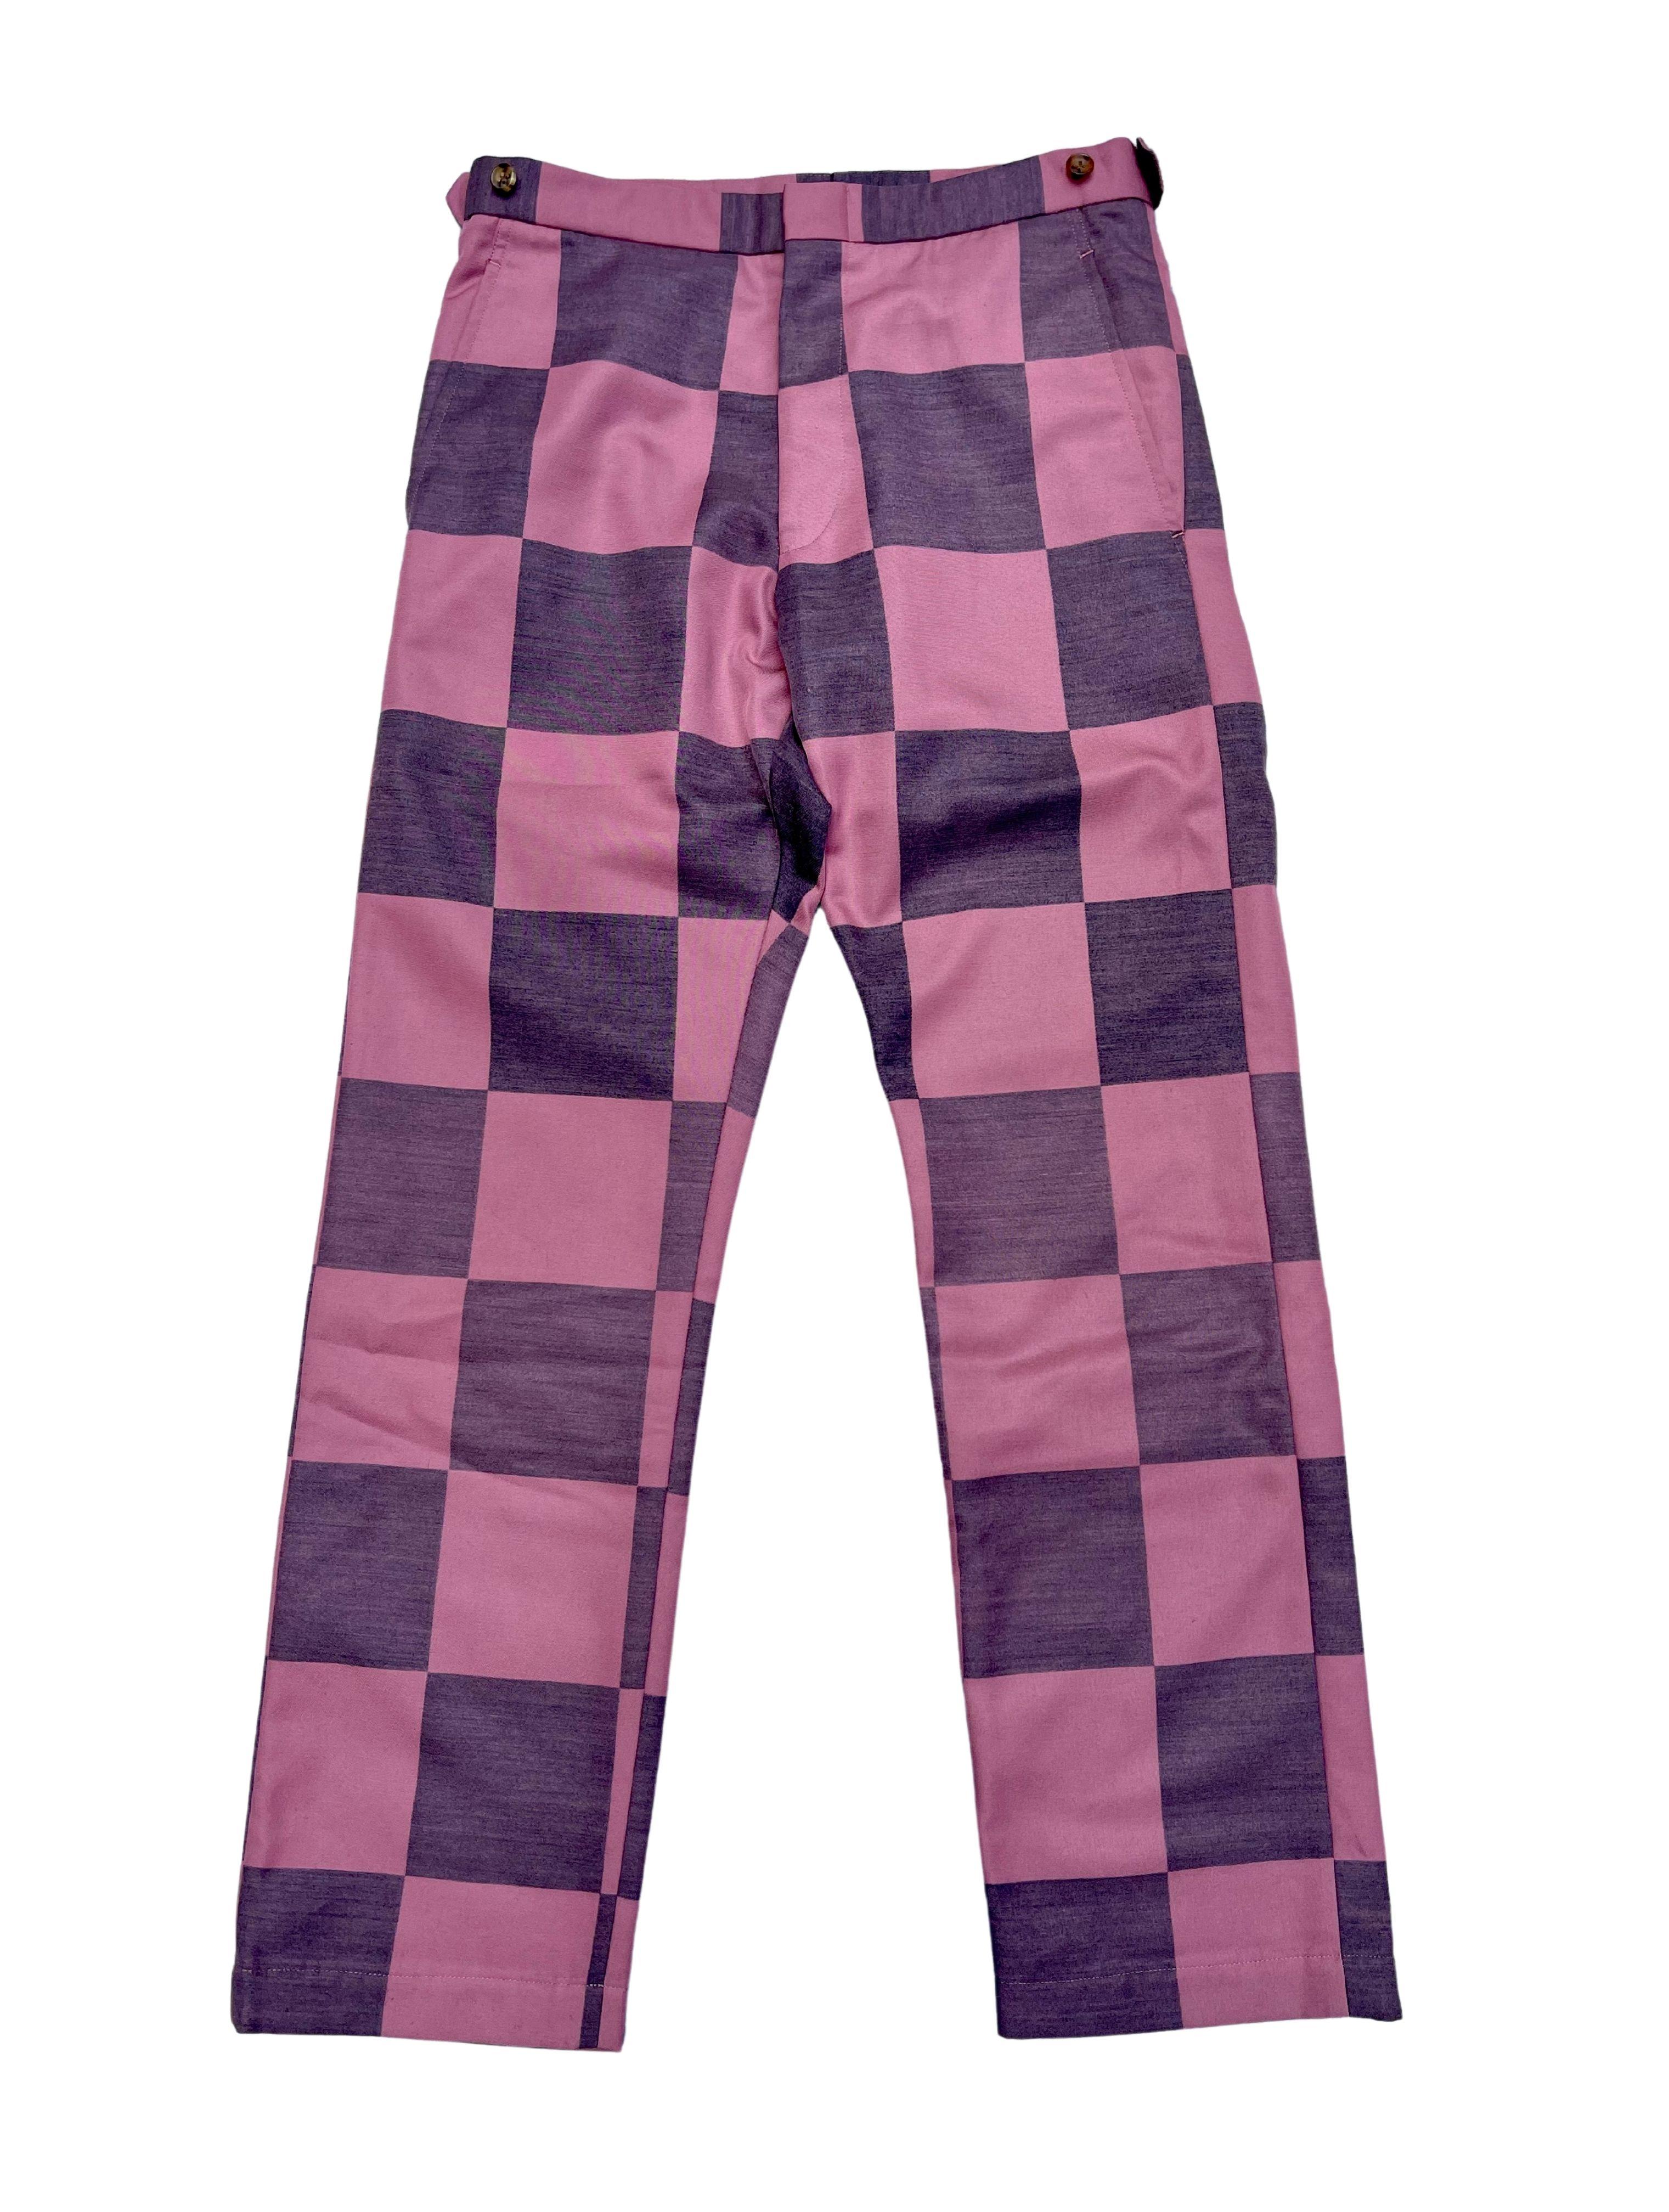 Gray COMME des GARCONS Homme Plus Checkered Suit, Spring Summer 2002, size M.